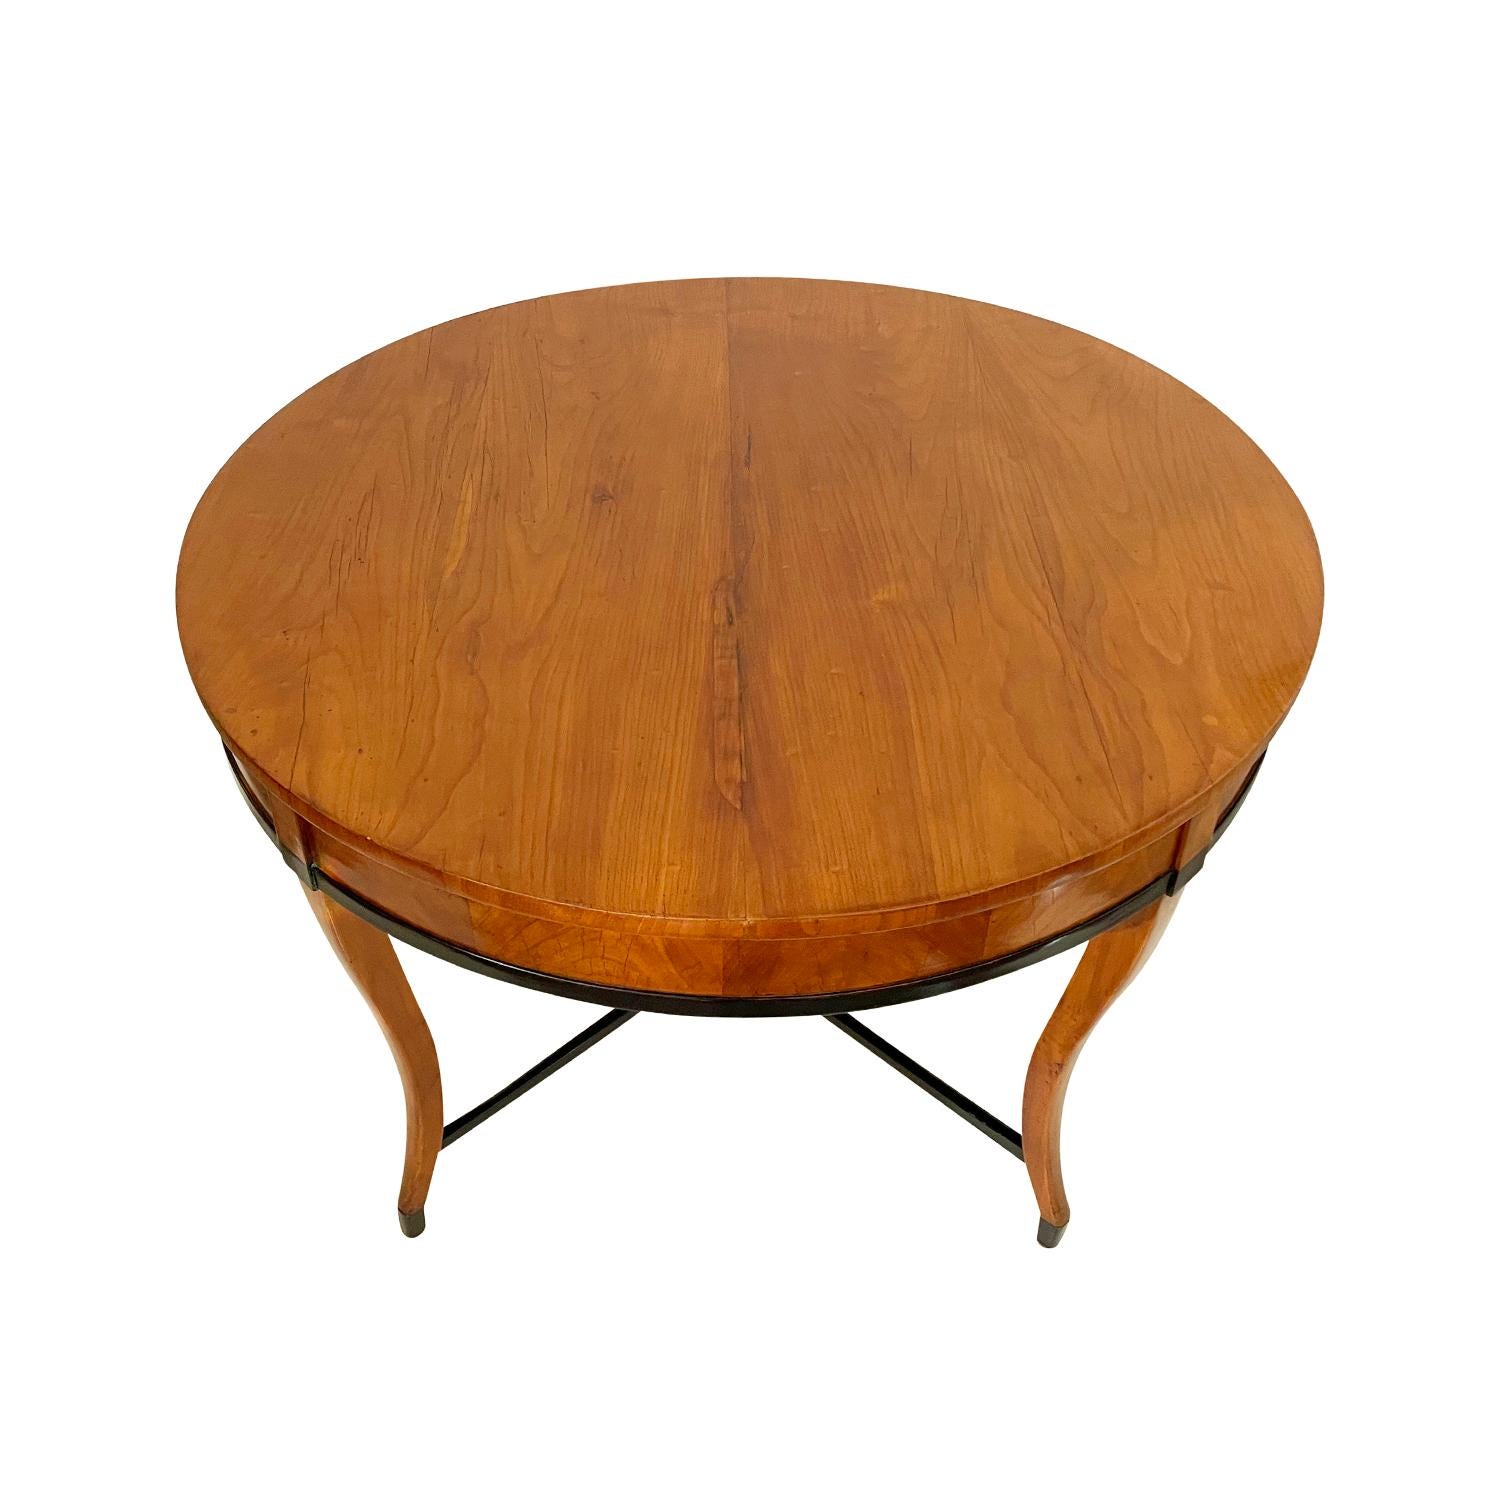 19th Century German Biedermeier Antique Round Cherrywood Dining Room Table For Sale 2